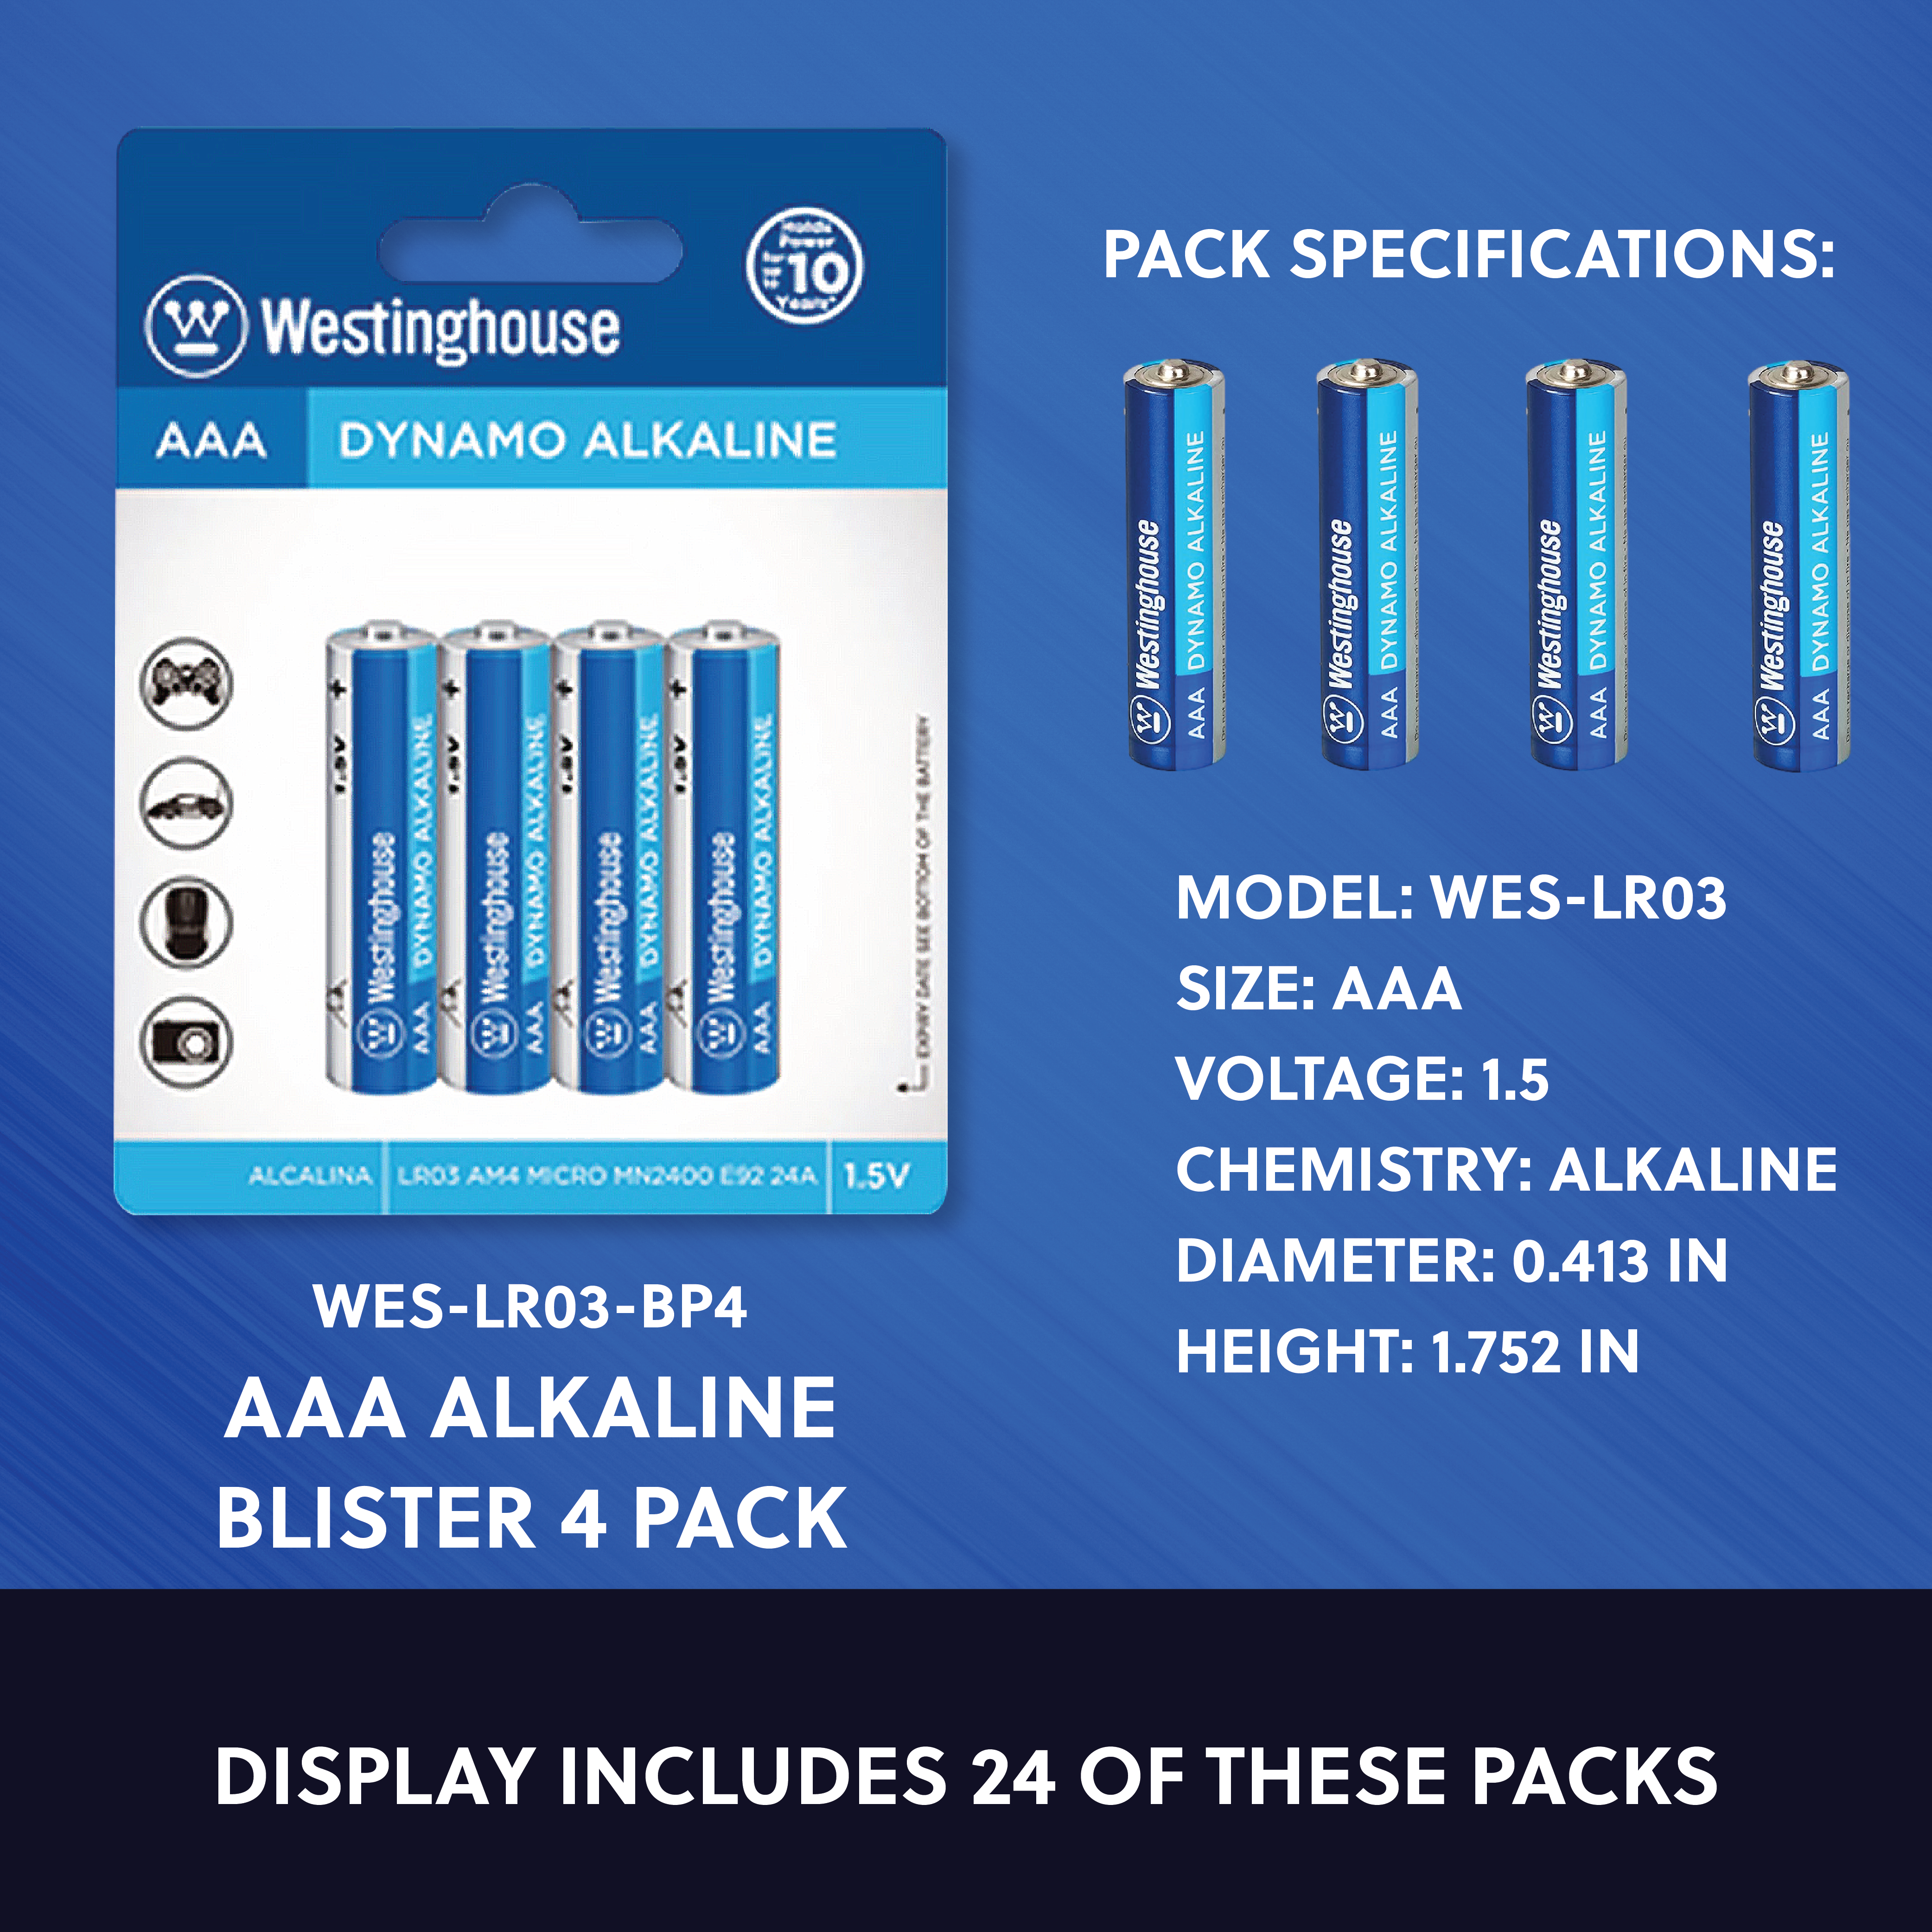 Westinghouse Dynamo Alkaline 96 pc. Battery Display